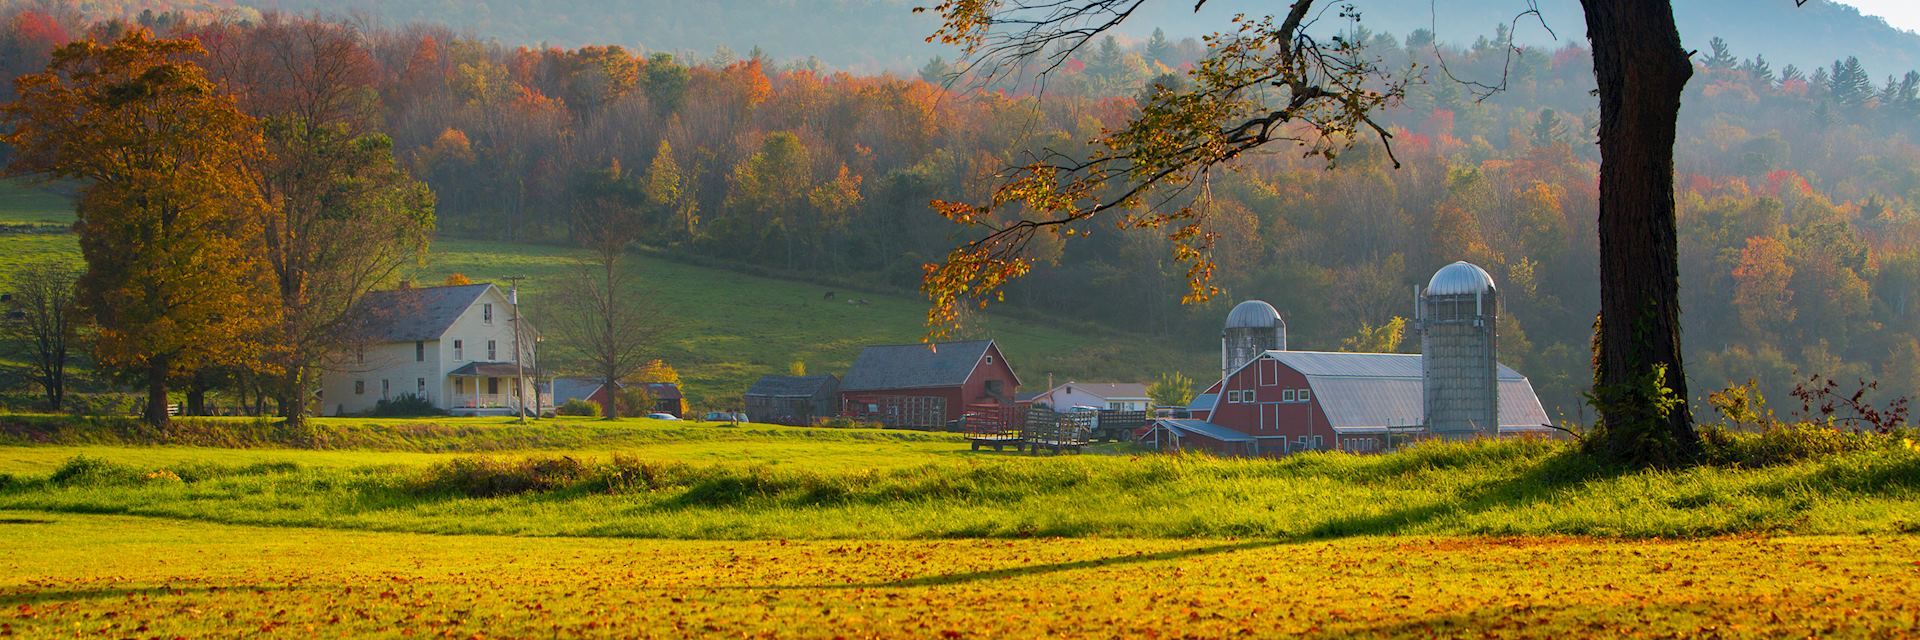 Vermont farmland, New England